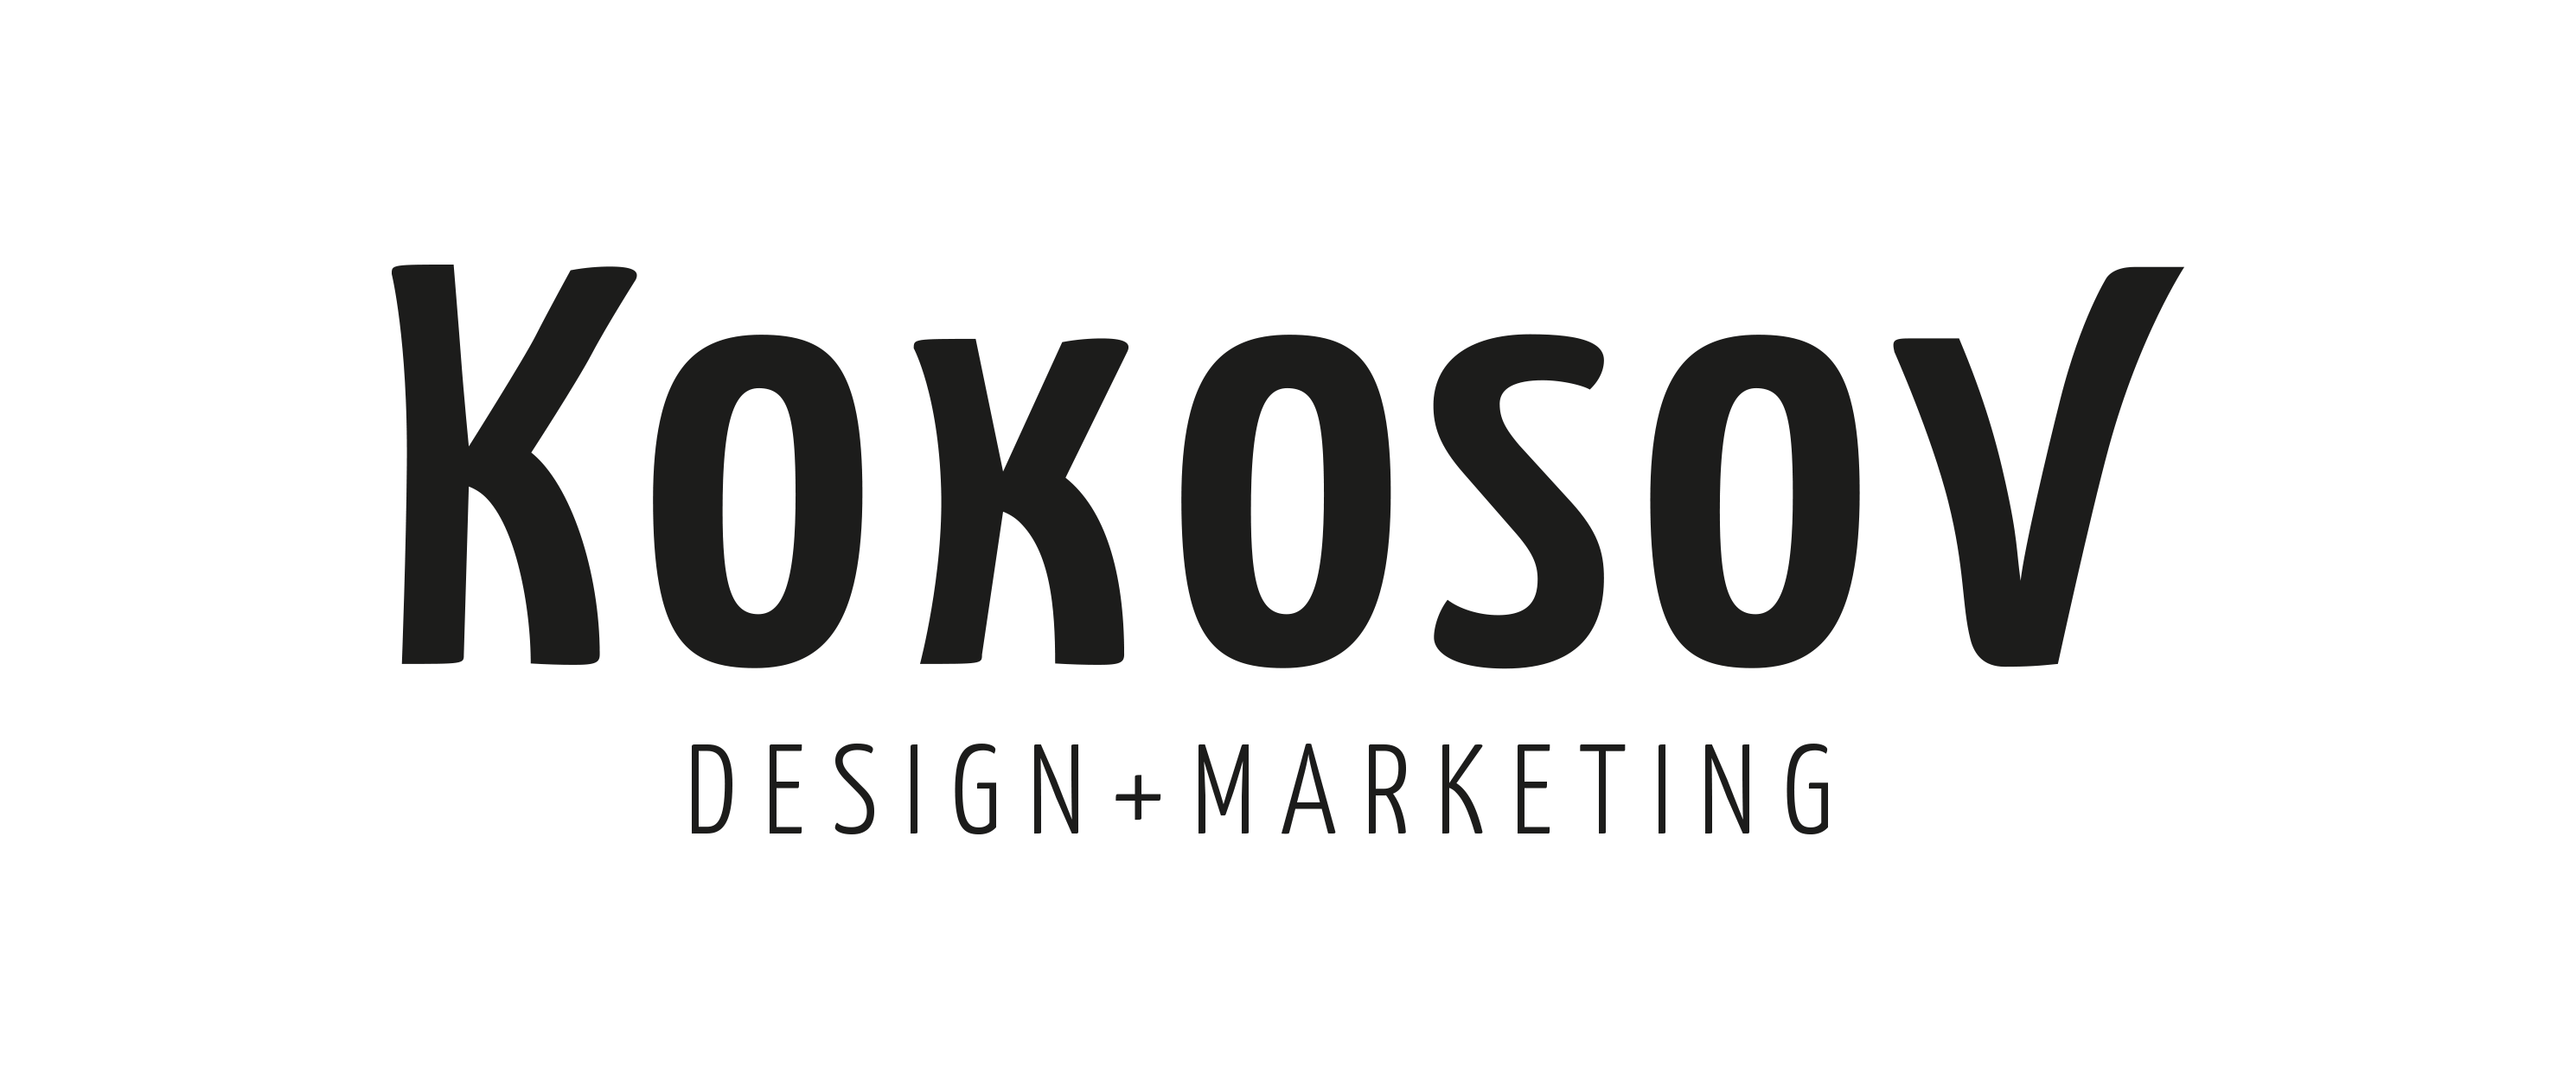 KOKOSOV Design + Marketing Логотип(logo)